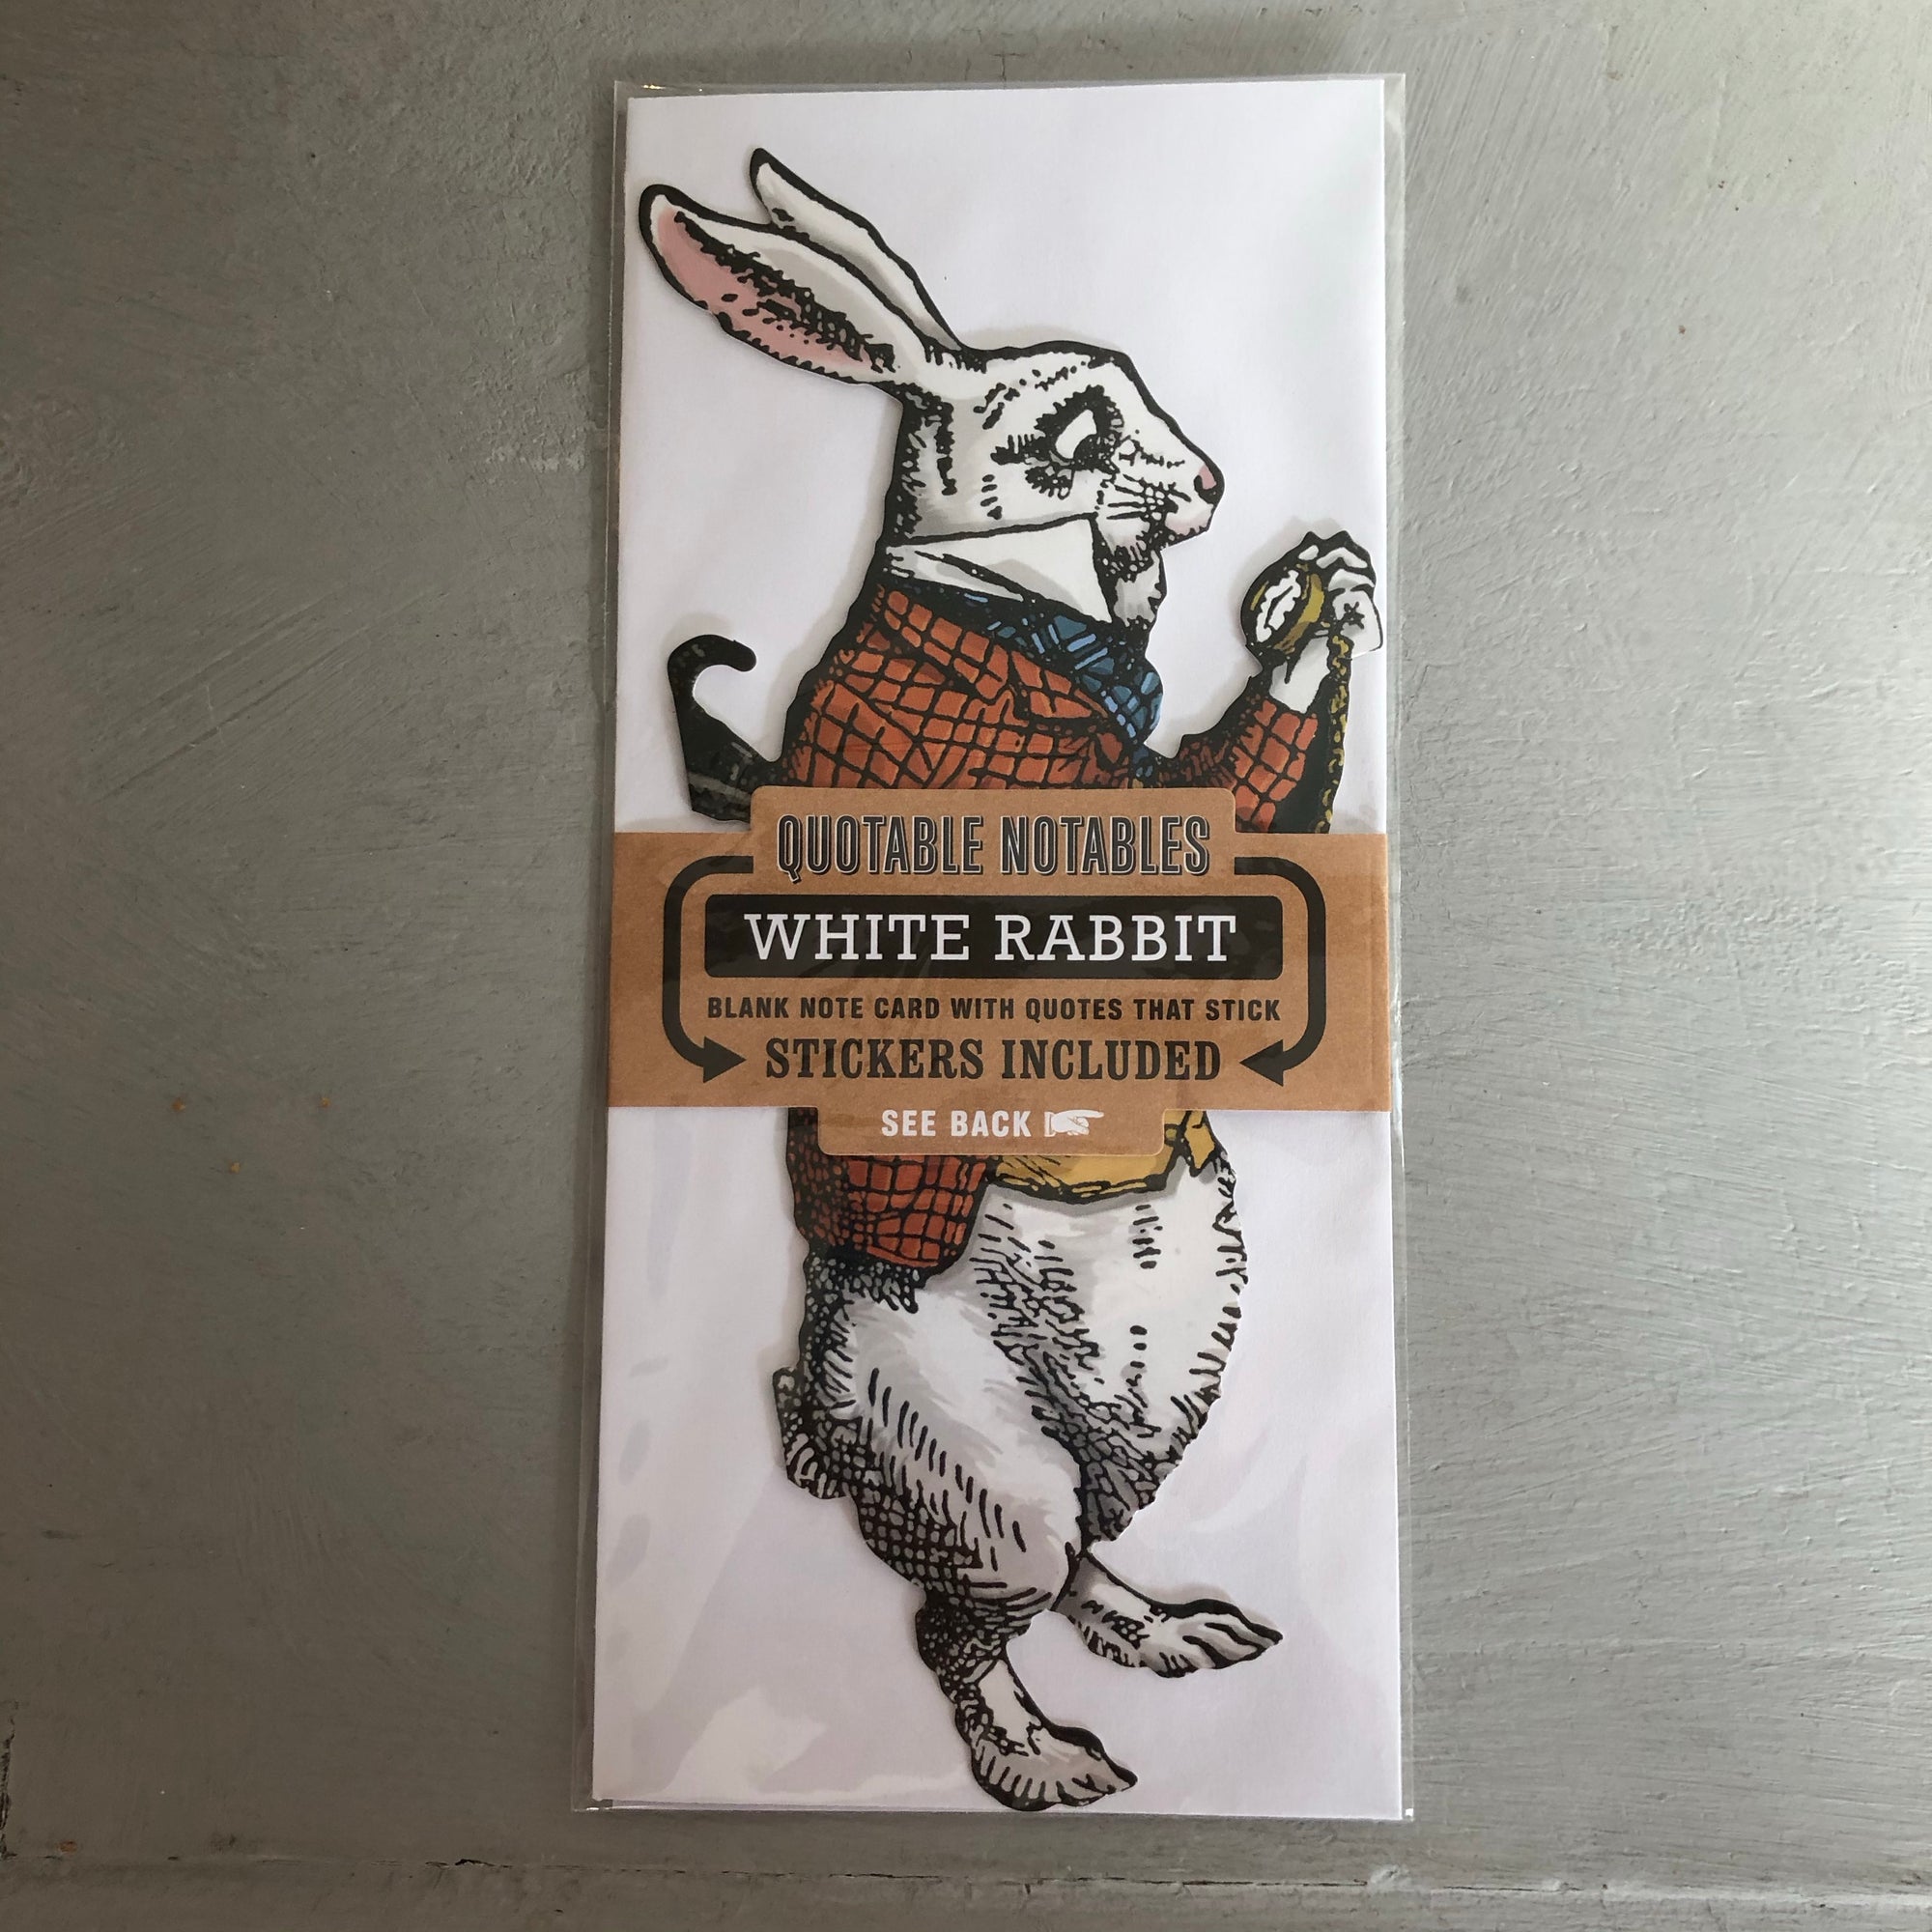 White Rabbit - Quotable Notable Card